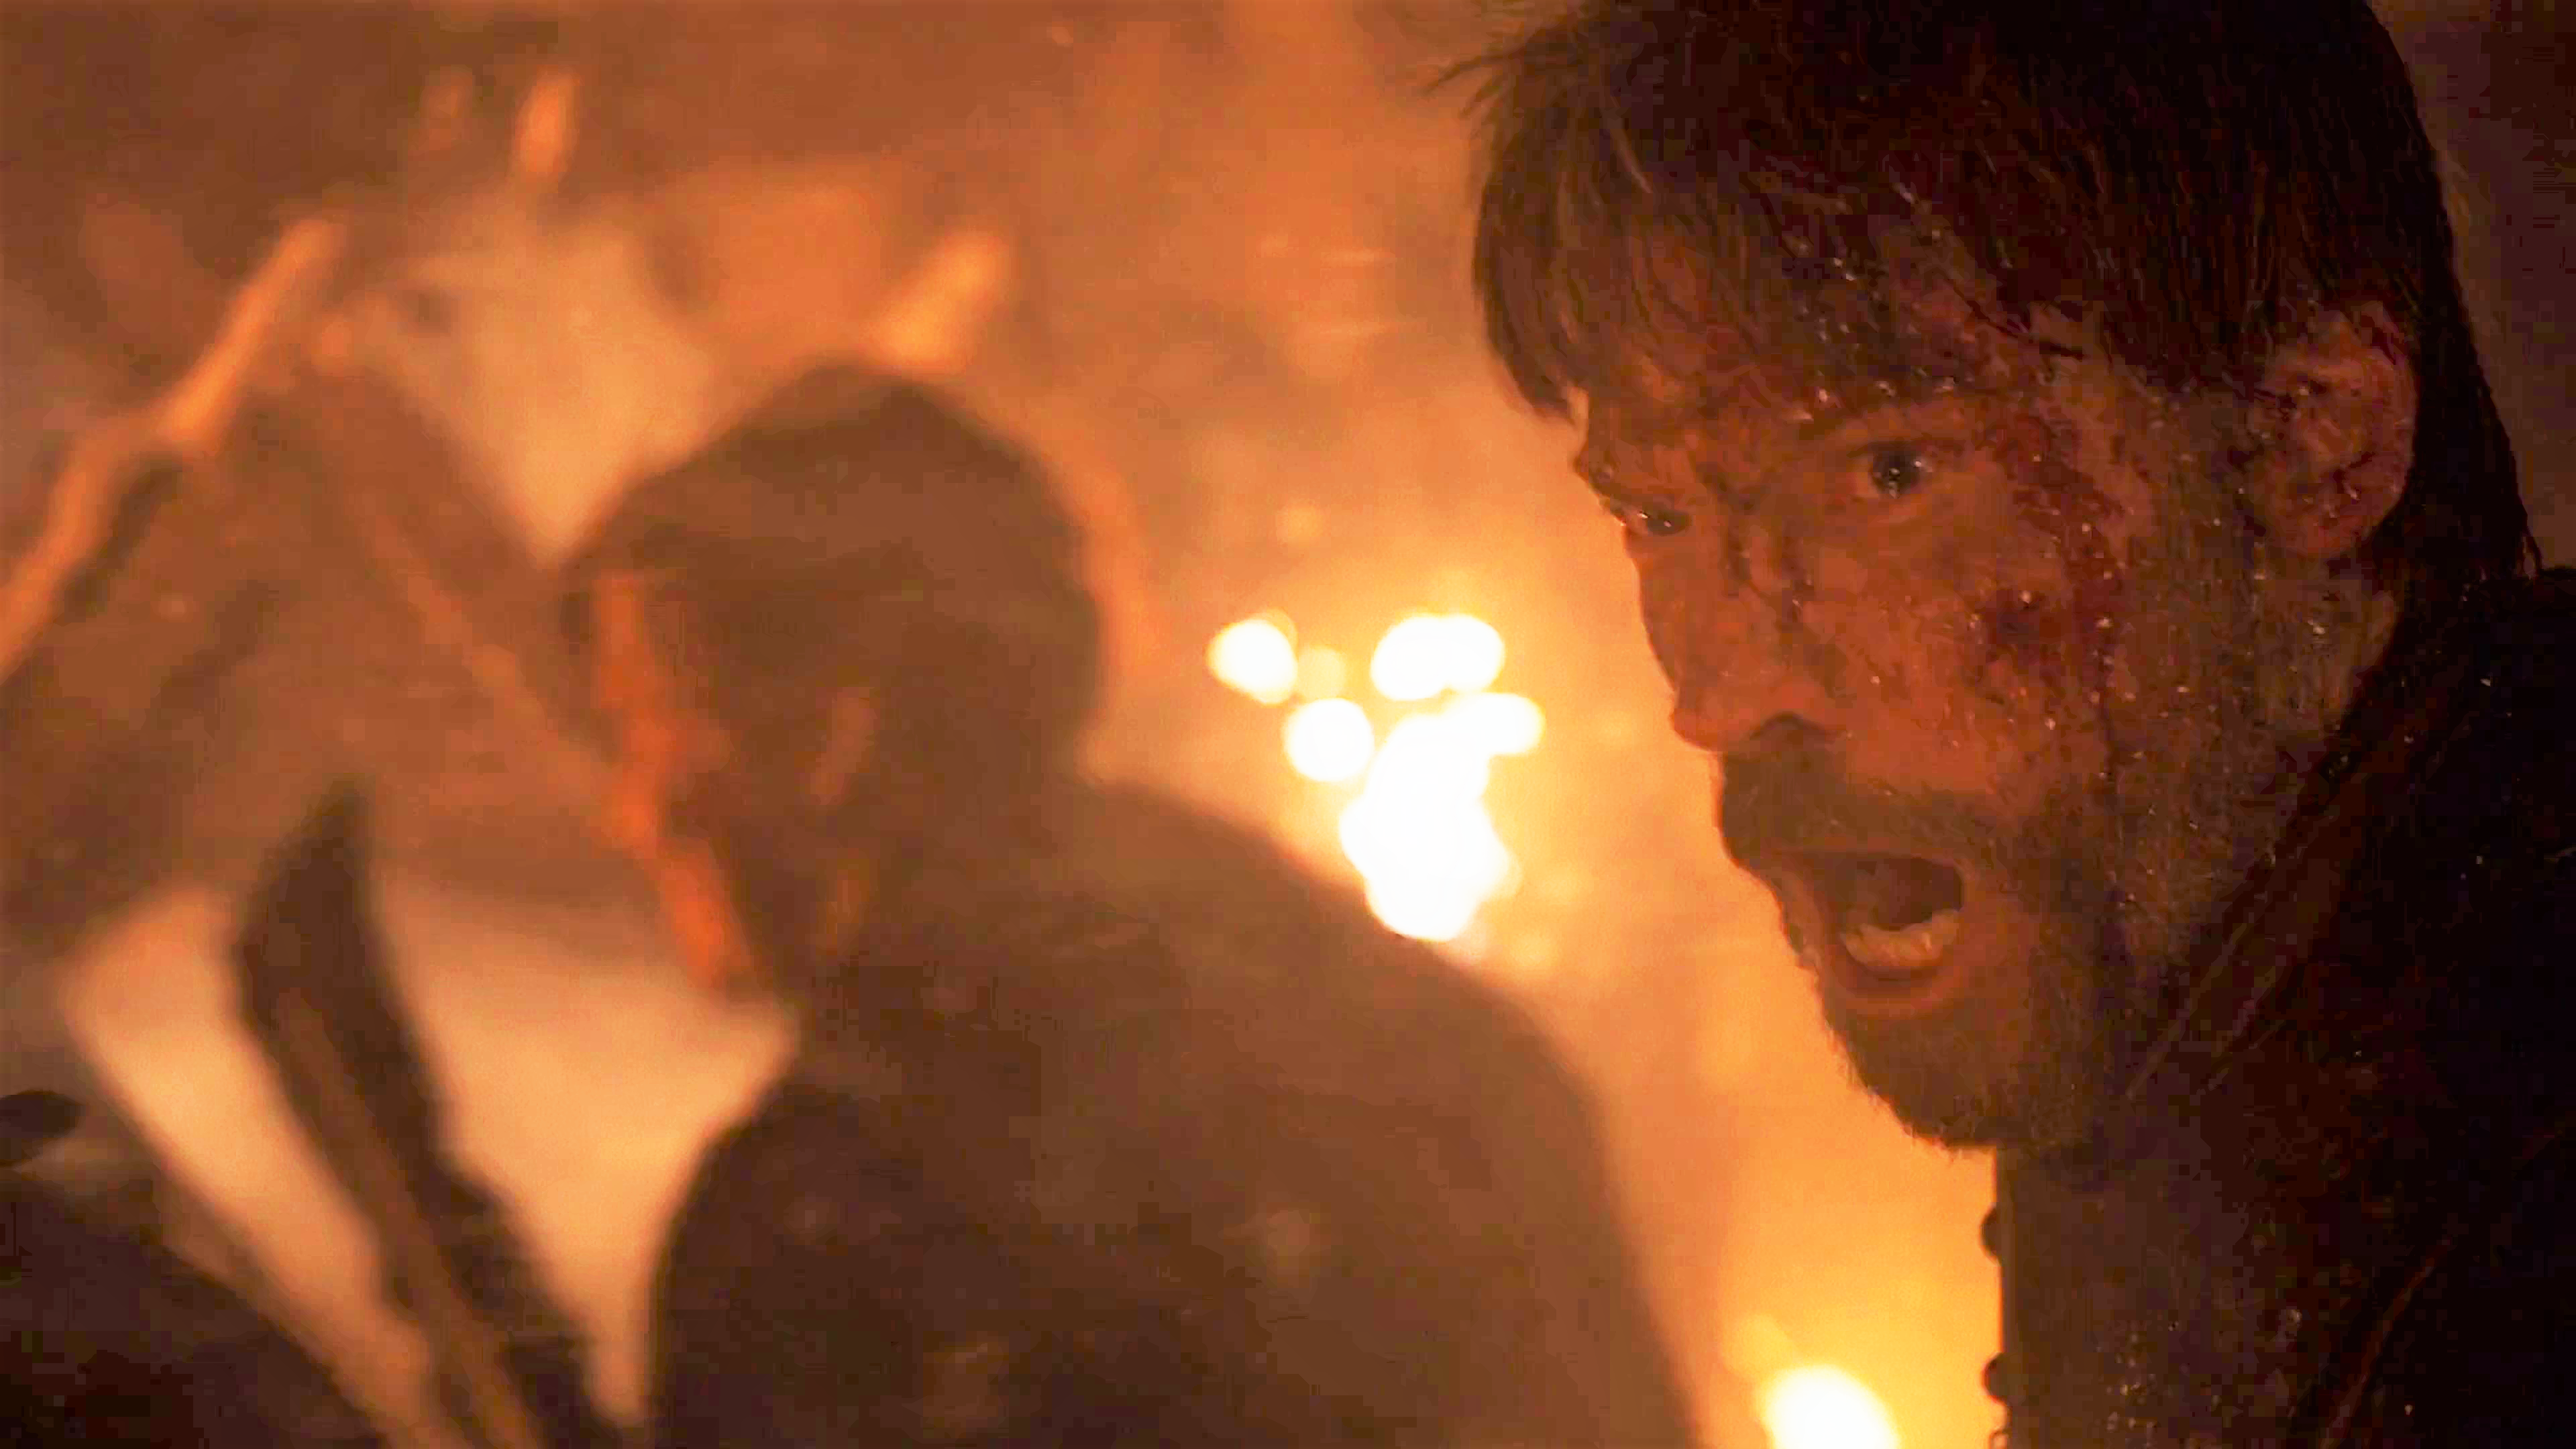 24. Season 8 Trailer Winterfell Battle Jaime Lannister Podrick Payne